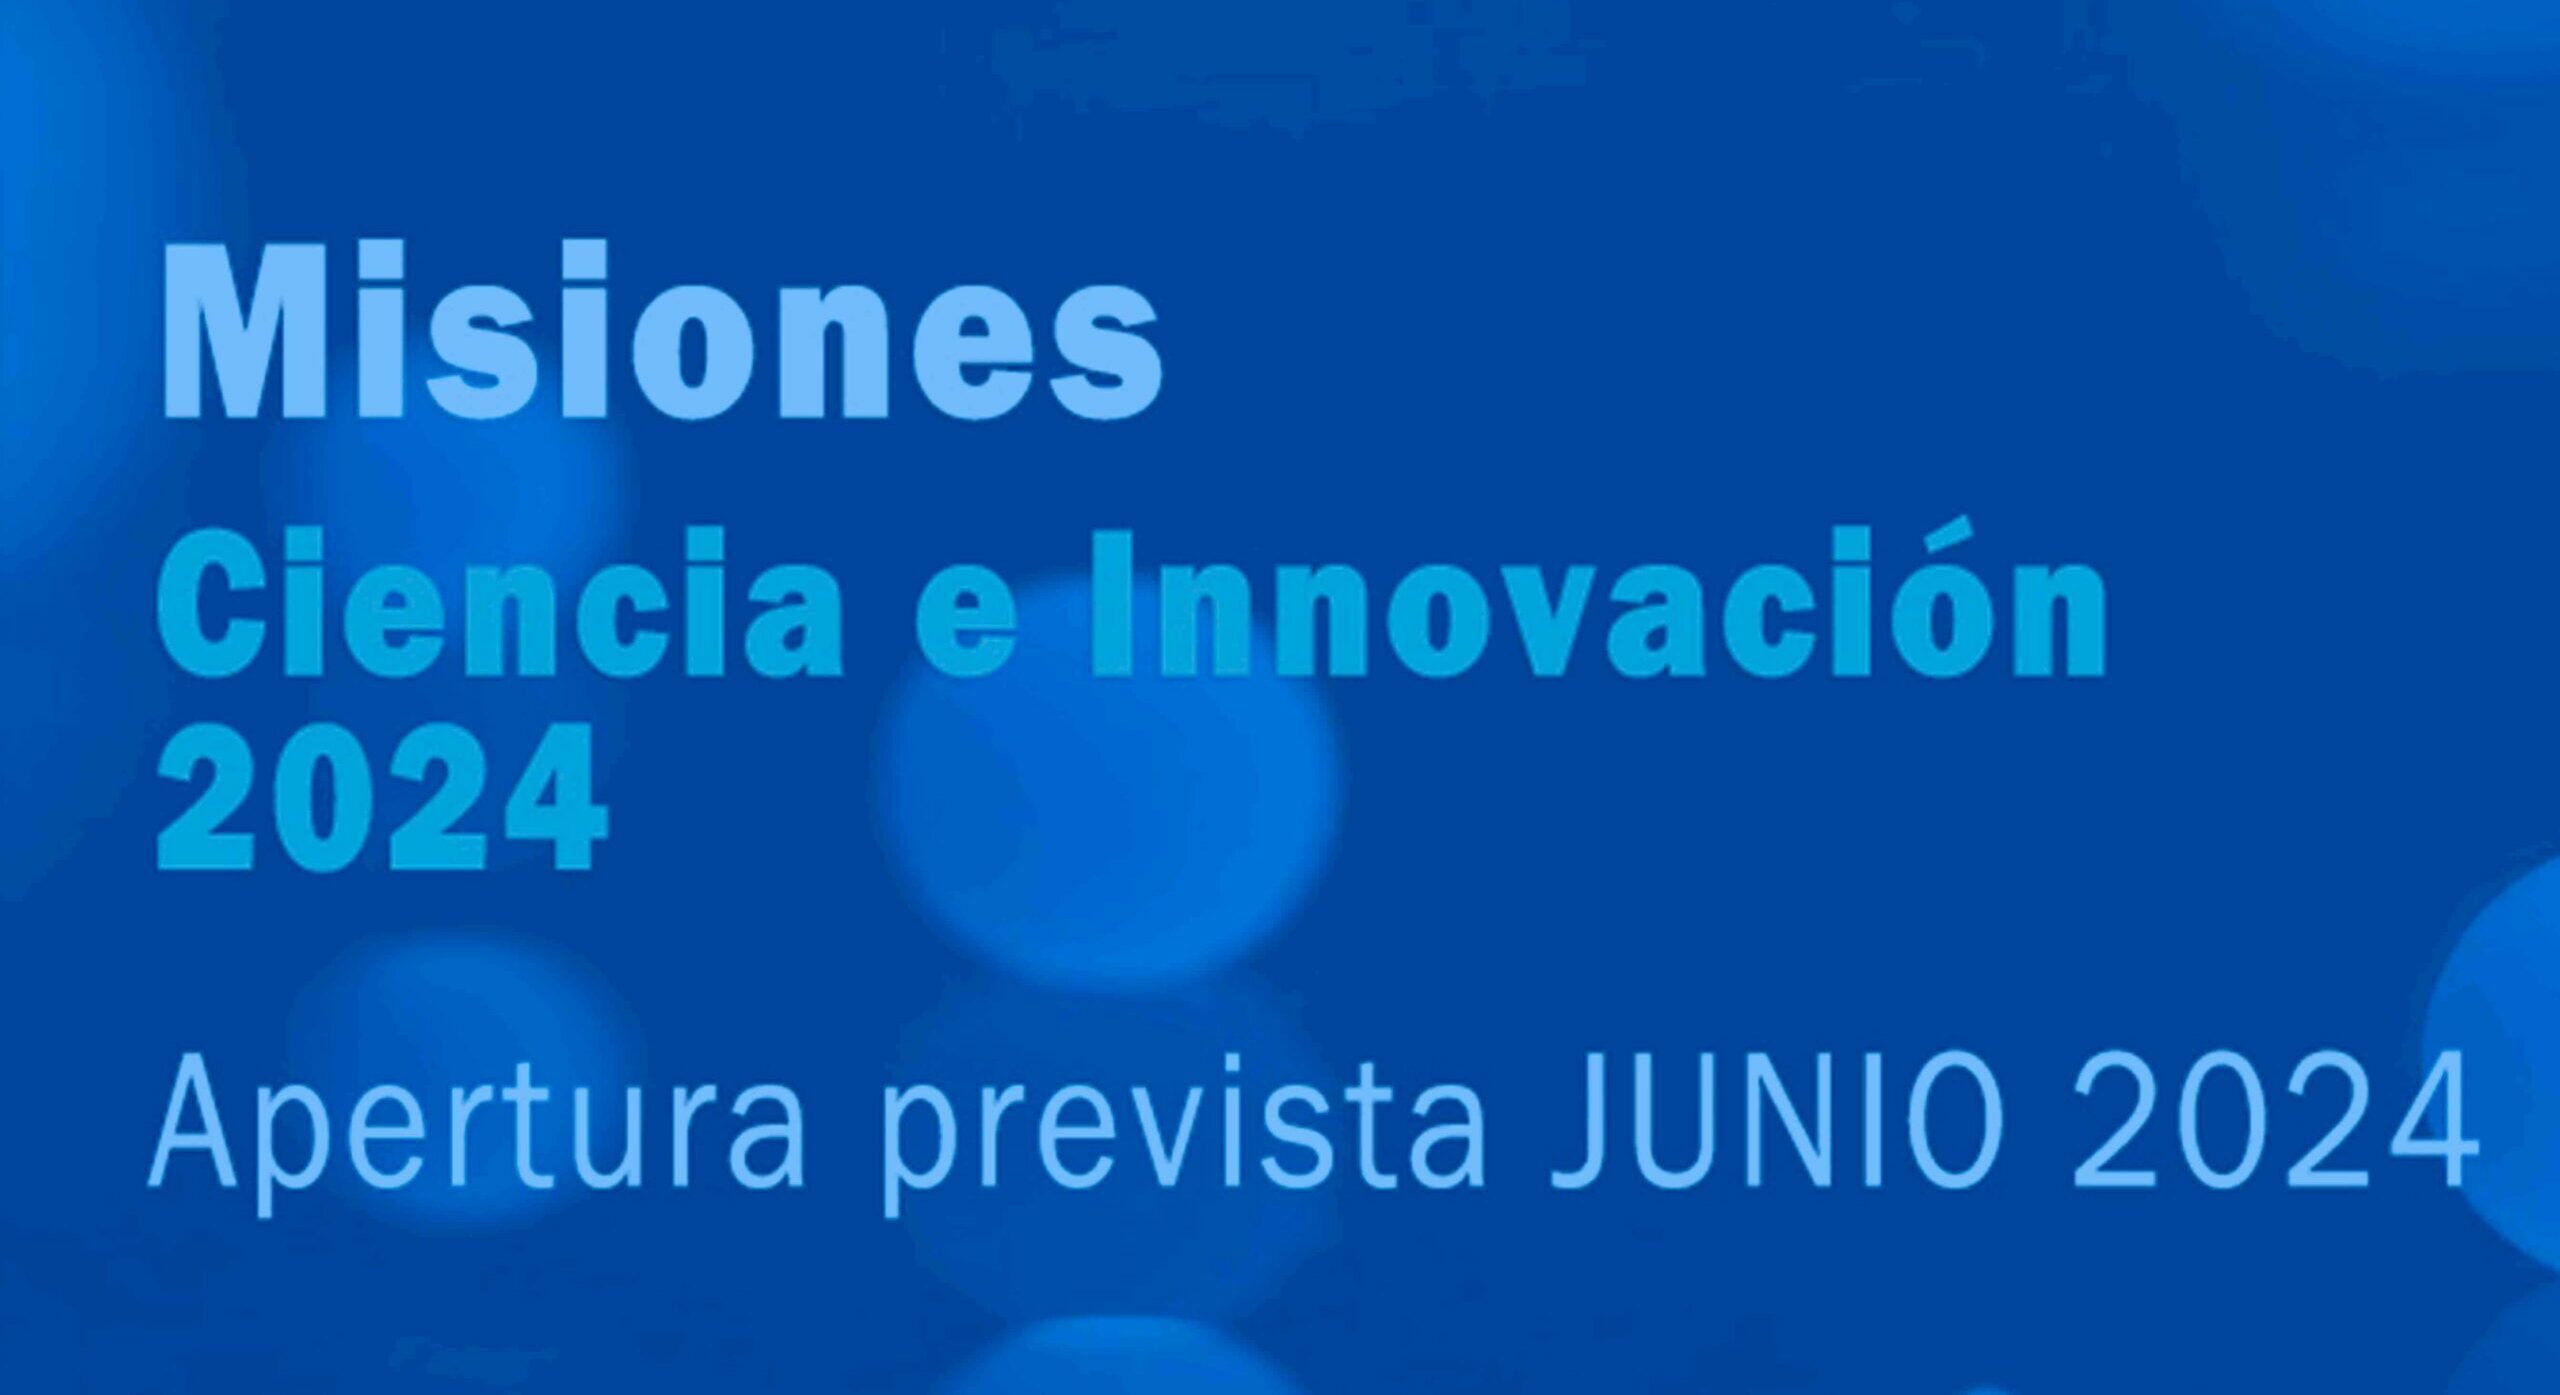 convocatoria misiones ciencia e innovacion 2024 - paudire innova